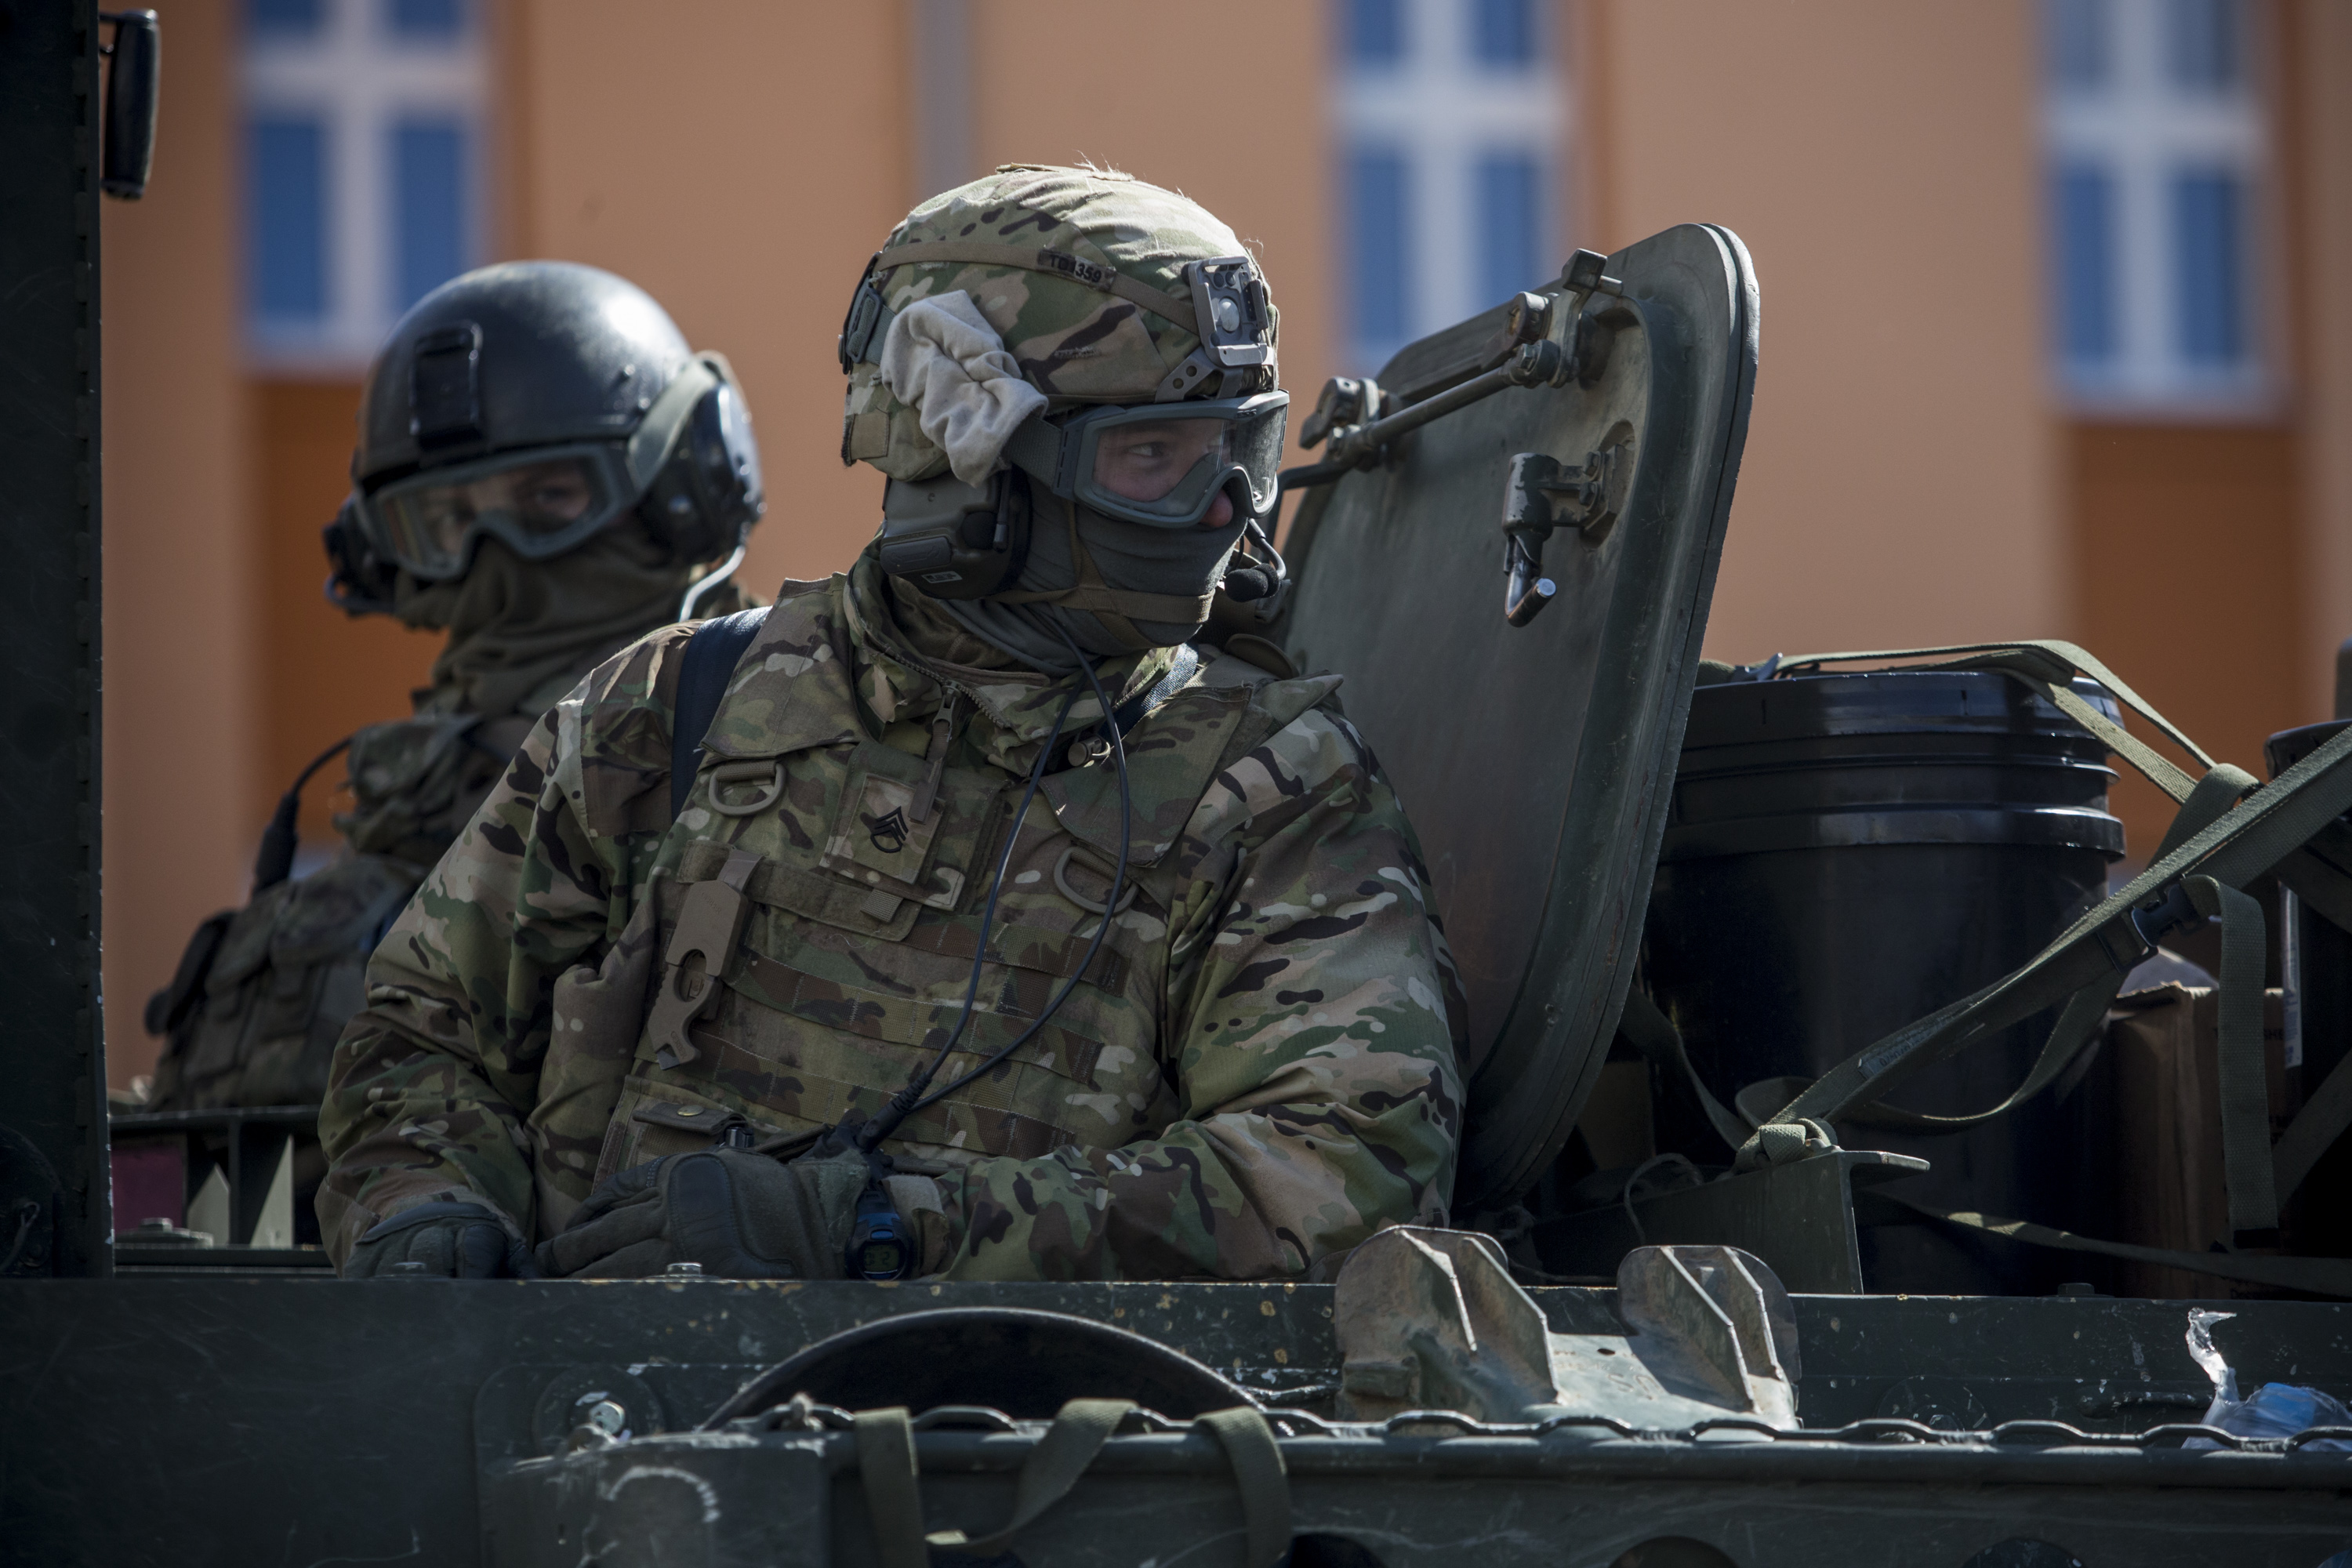 U.S. Troops Cross Czech Republic In "Operation Atlantic Resolve" Exercises